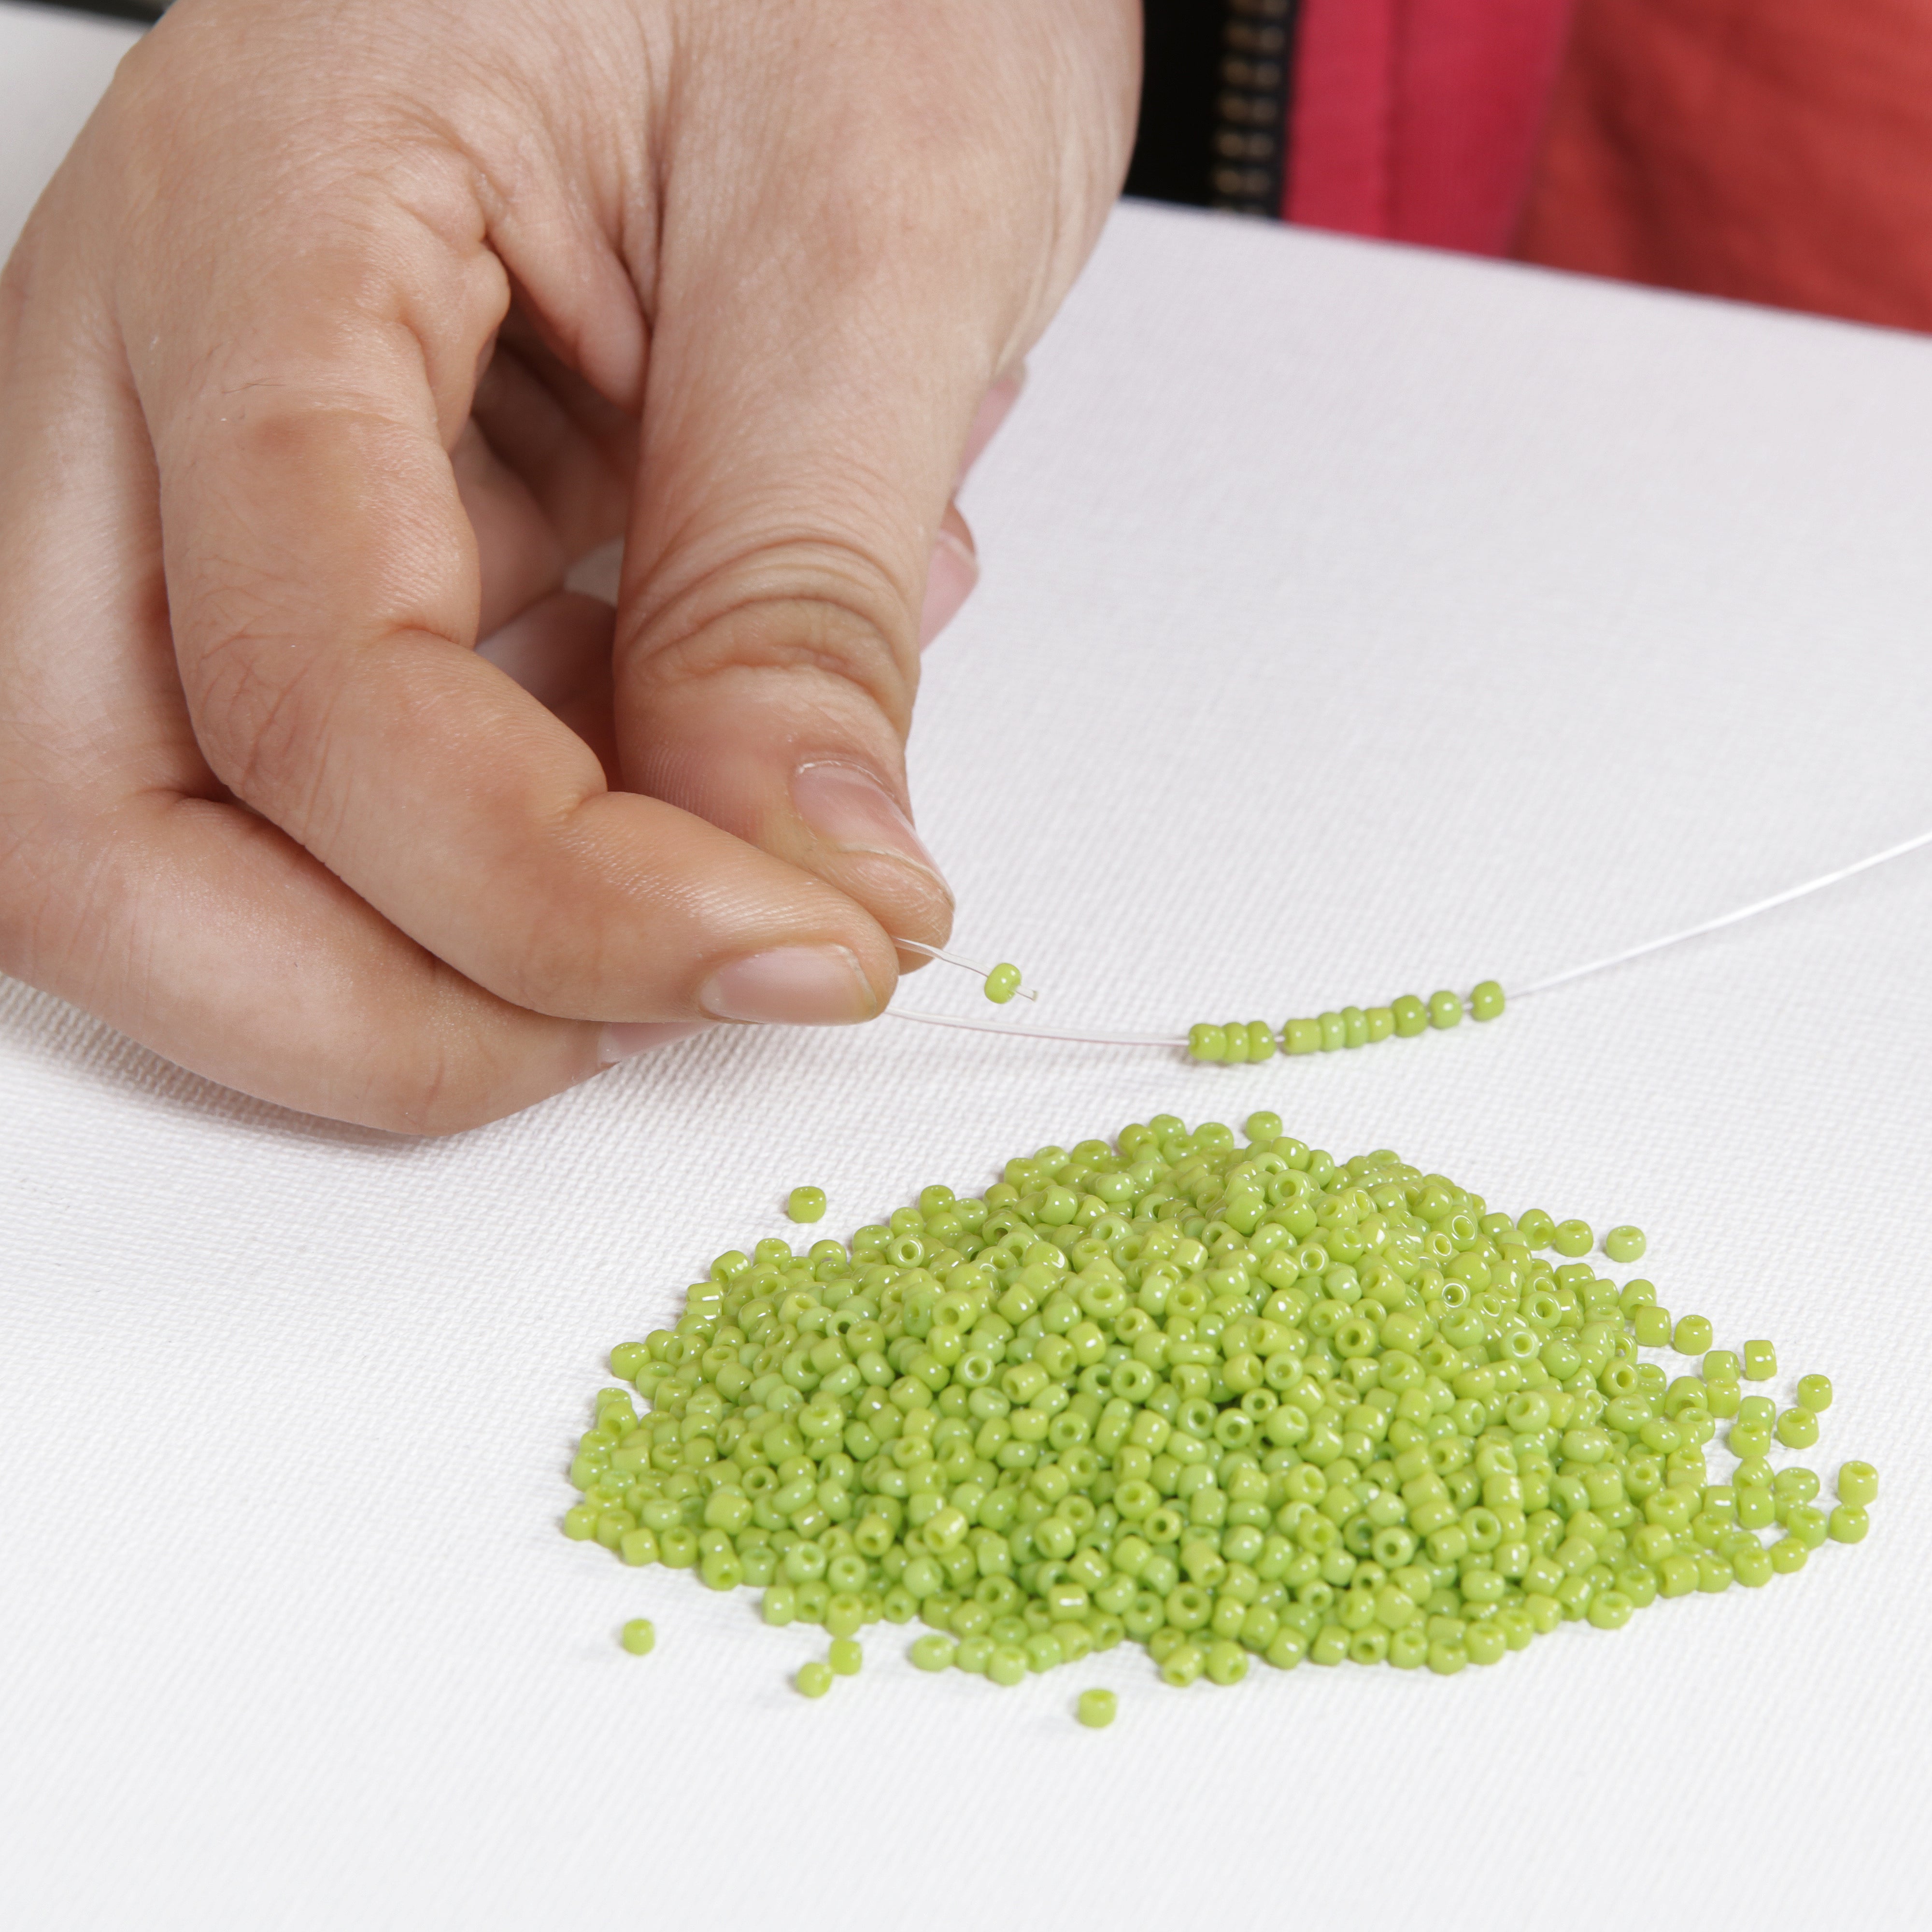 Seed Beads Opaque Fern Green 2Mm 30Gm